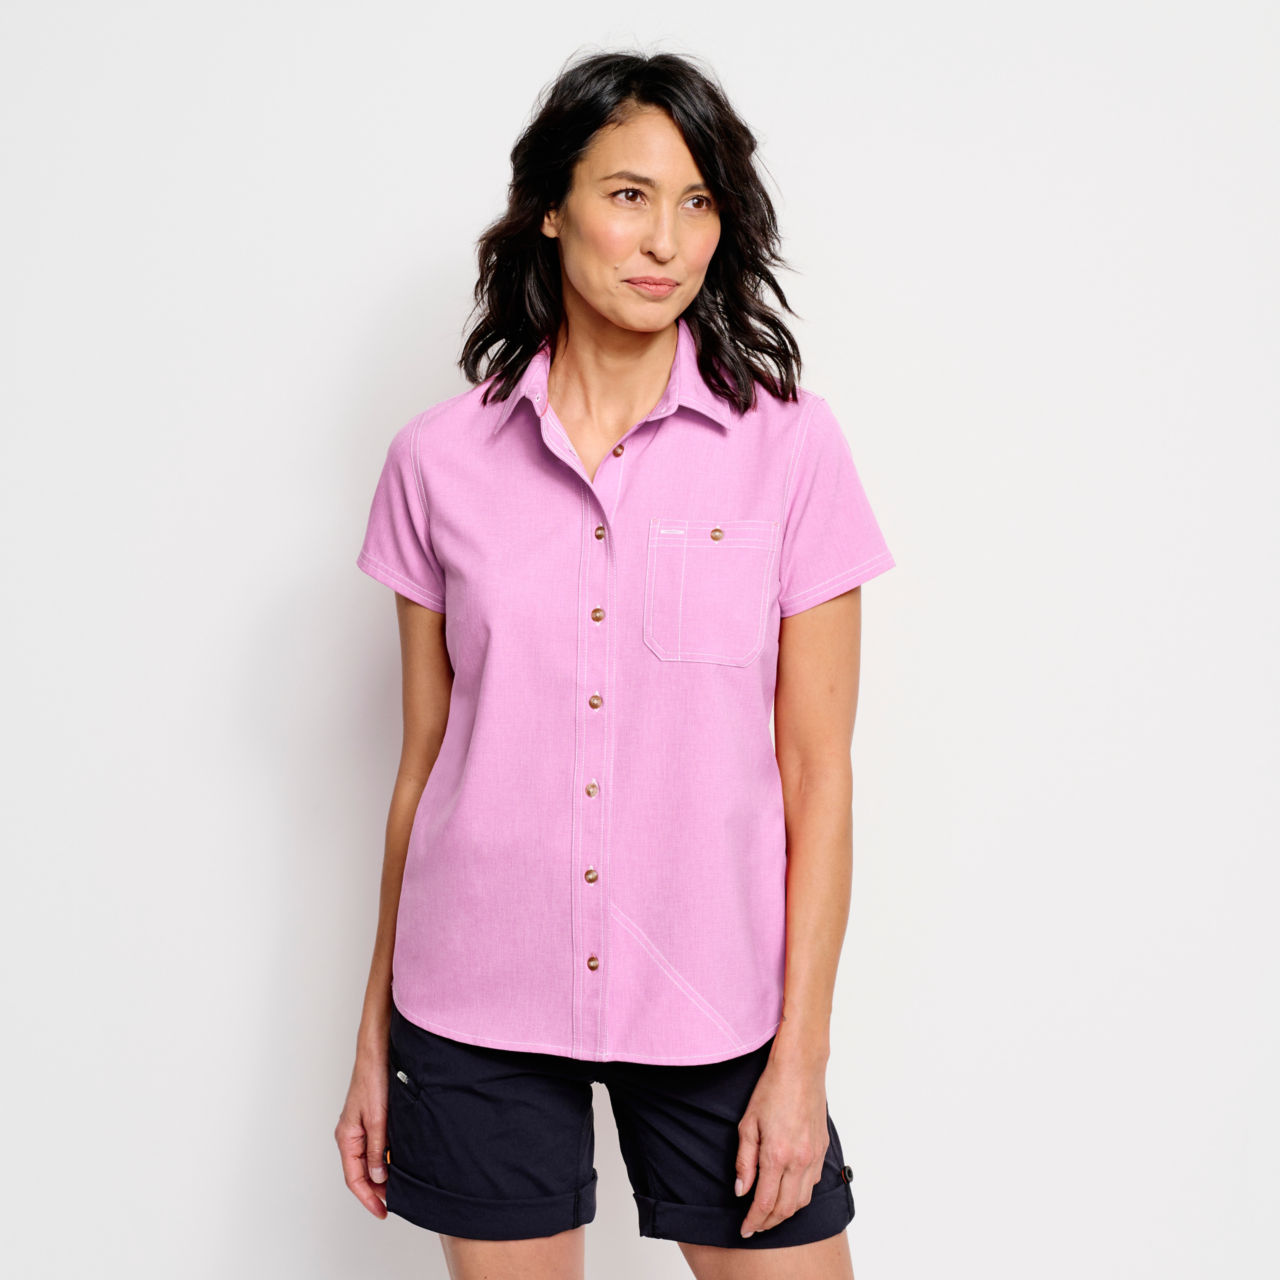 Women’s Tech Chambray Short-Sleeved Work Shirt - PINK LEMONADE image number 0